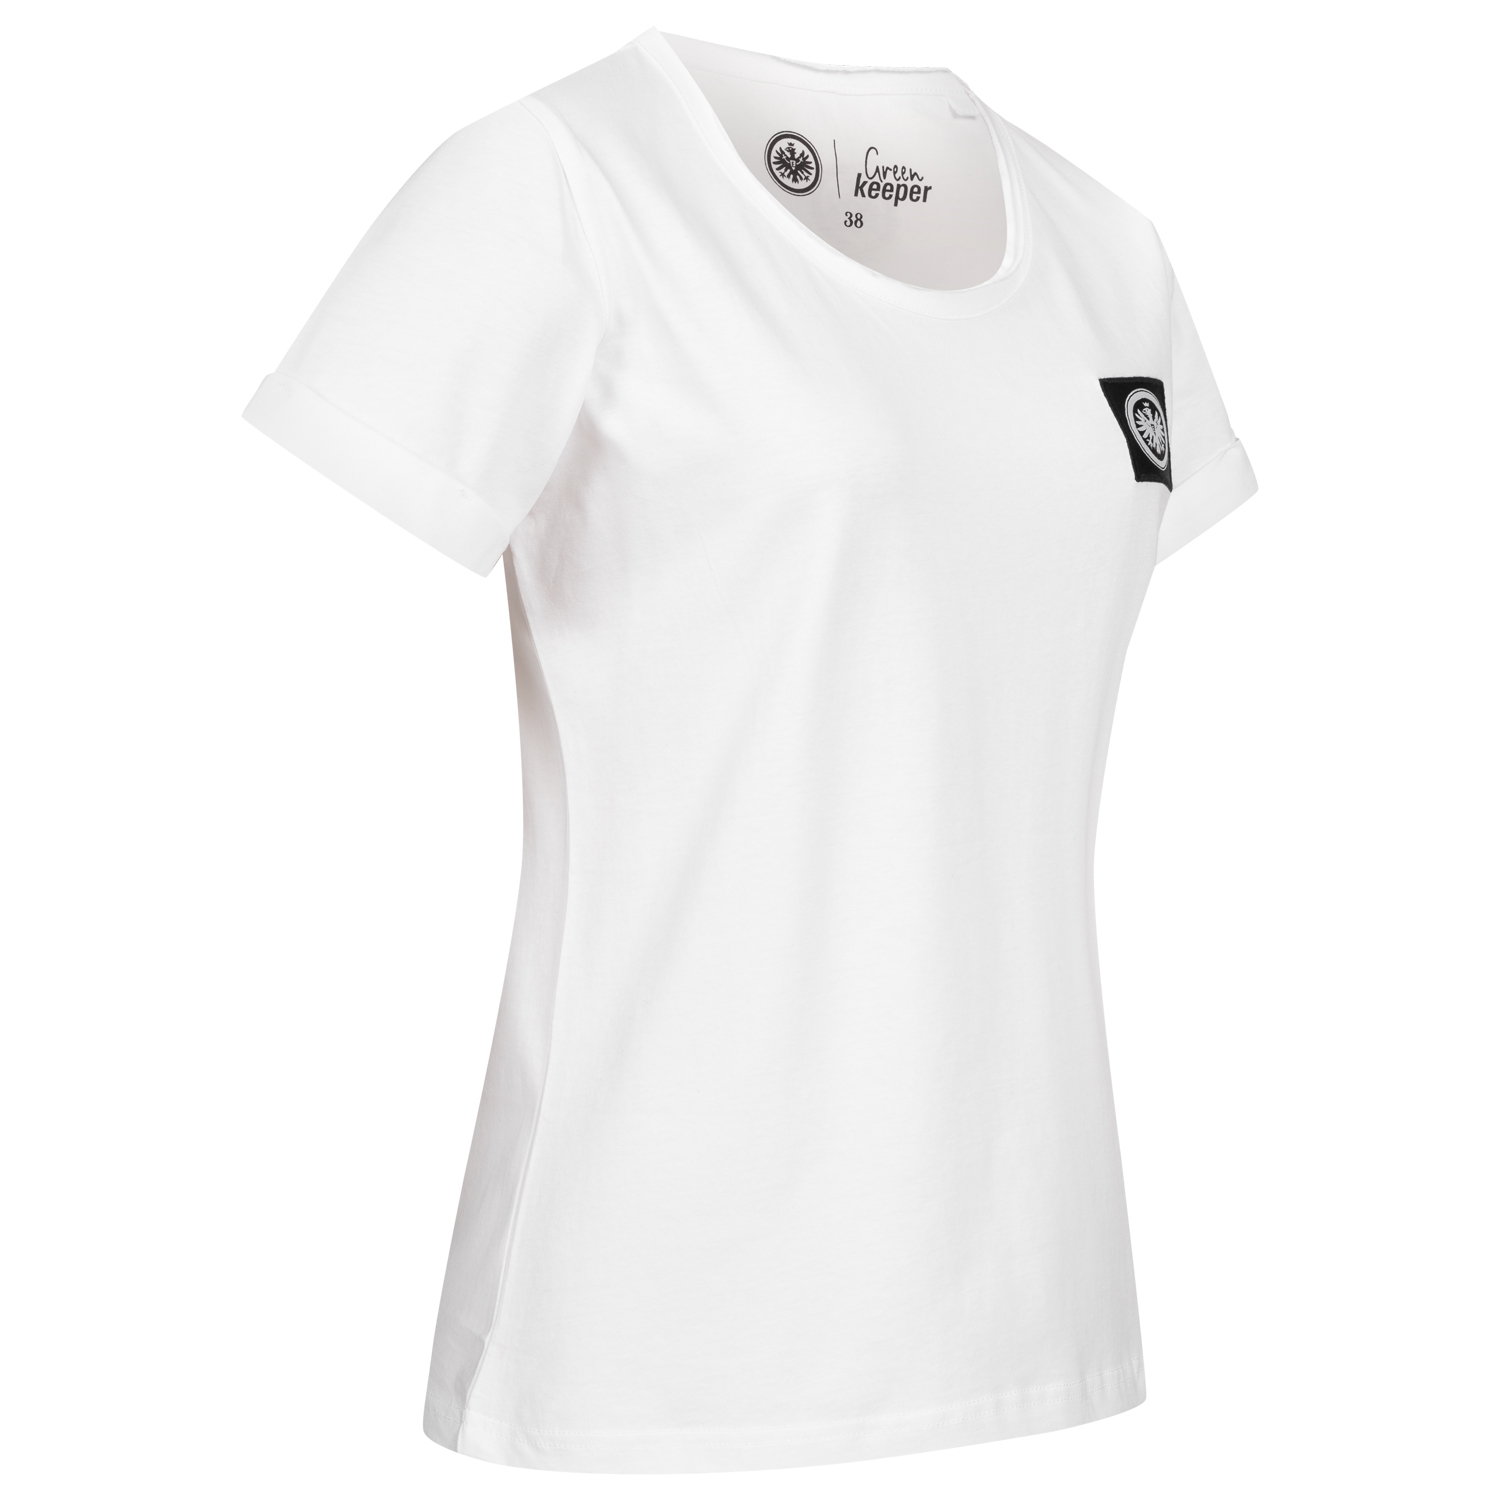 Bild 3: Damen Shirt Logo Badge White